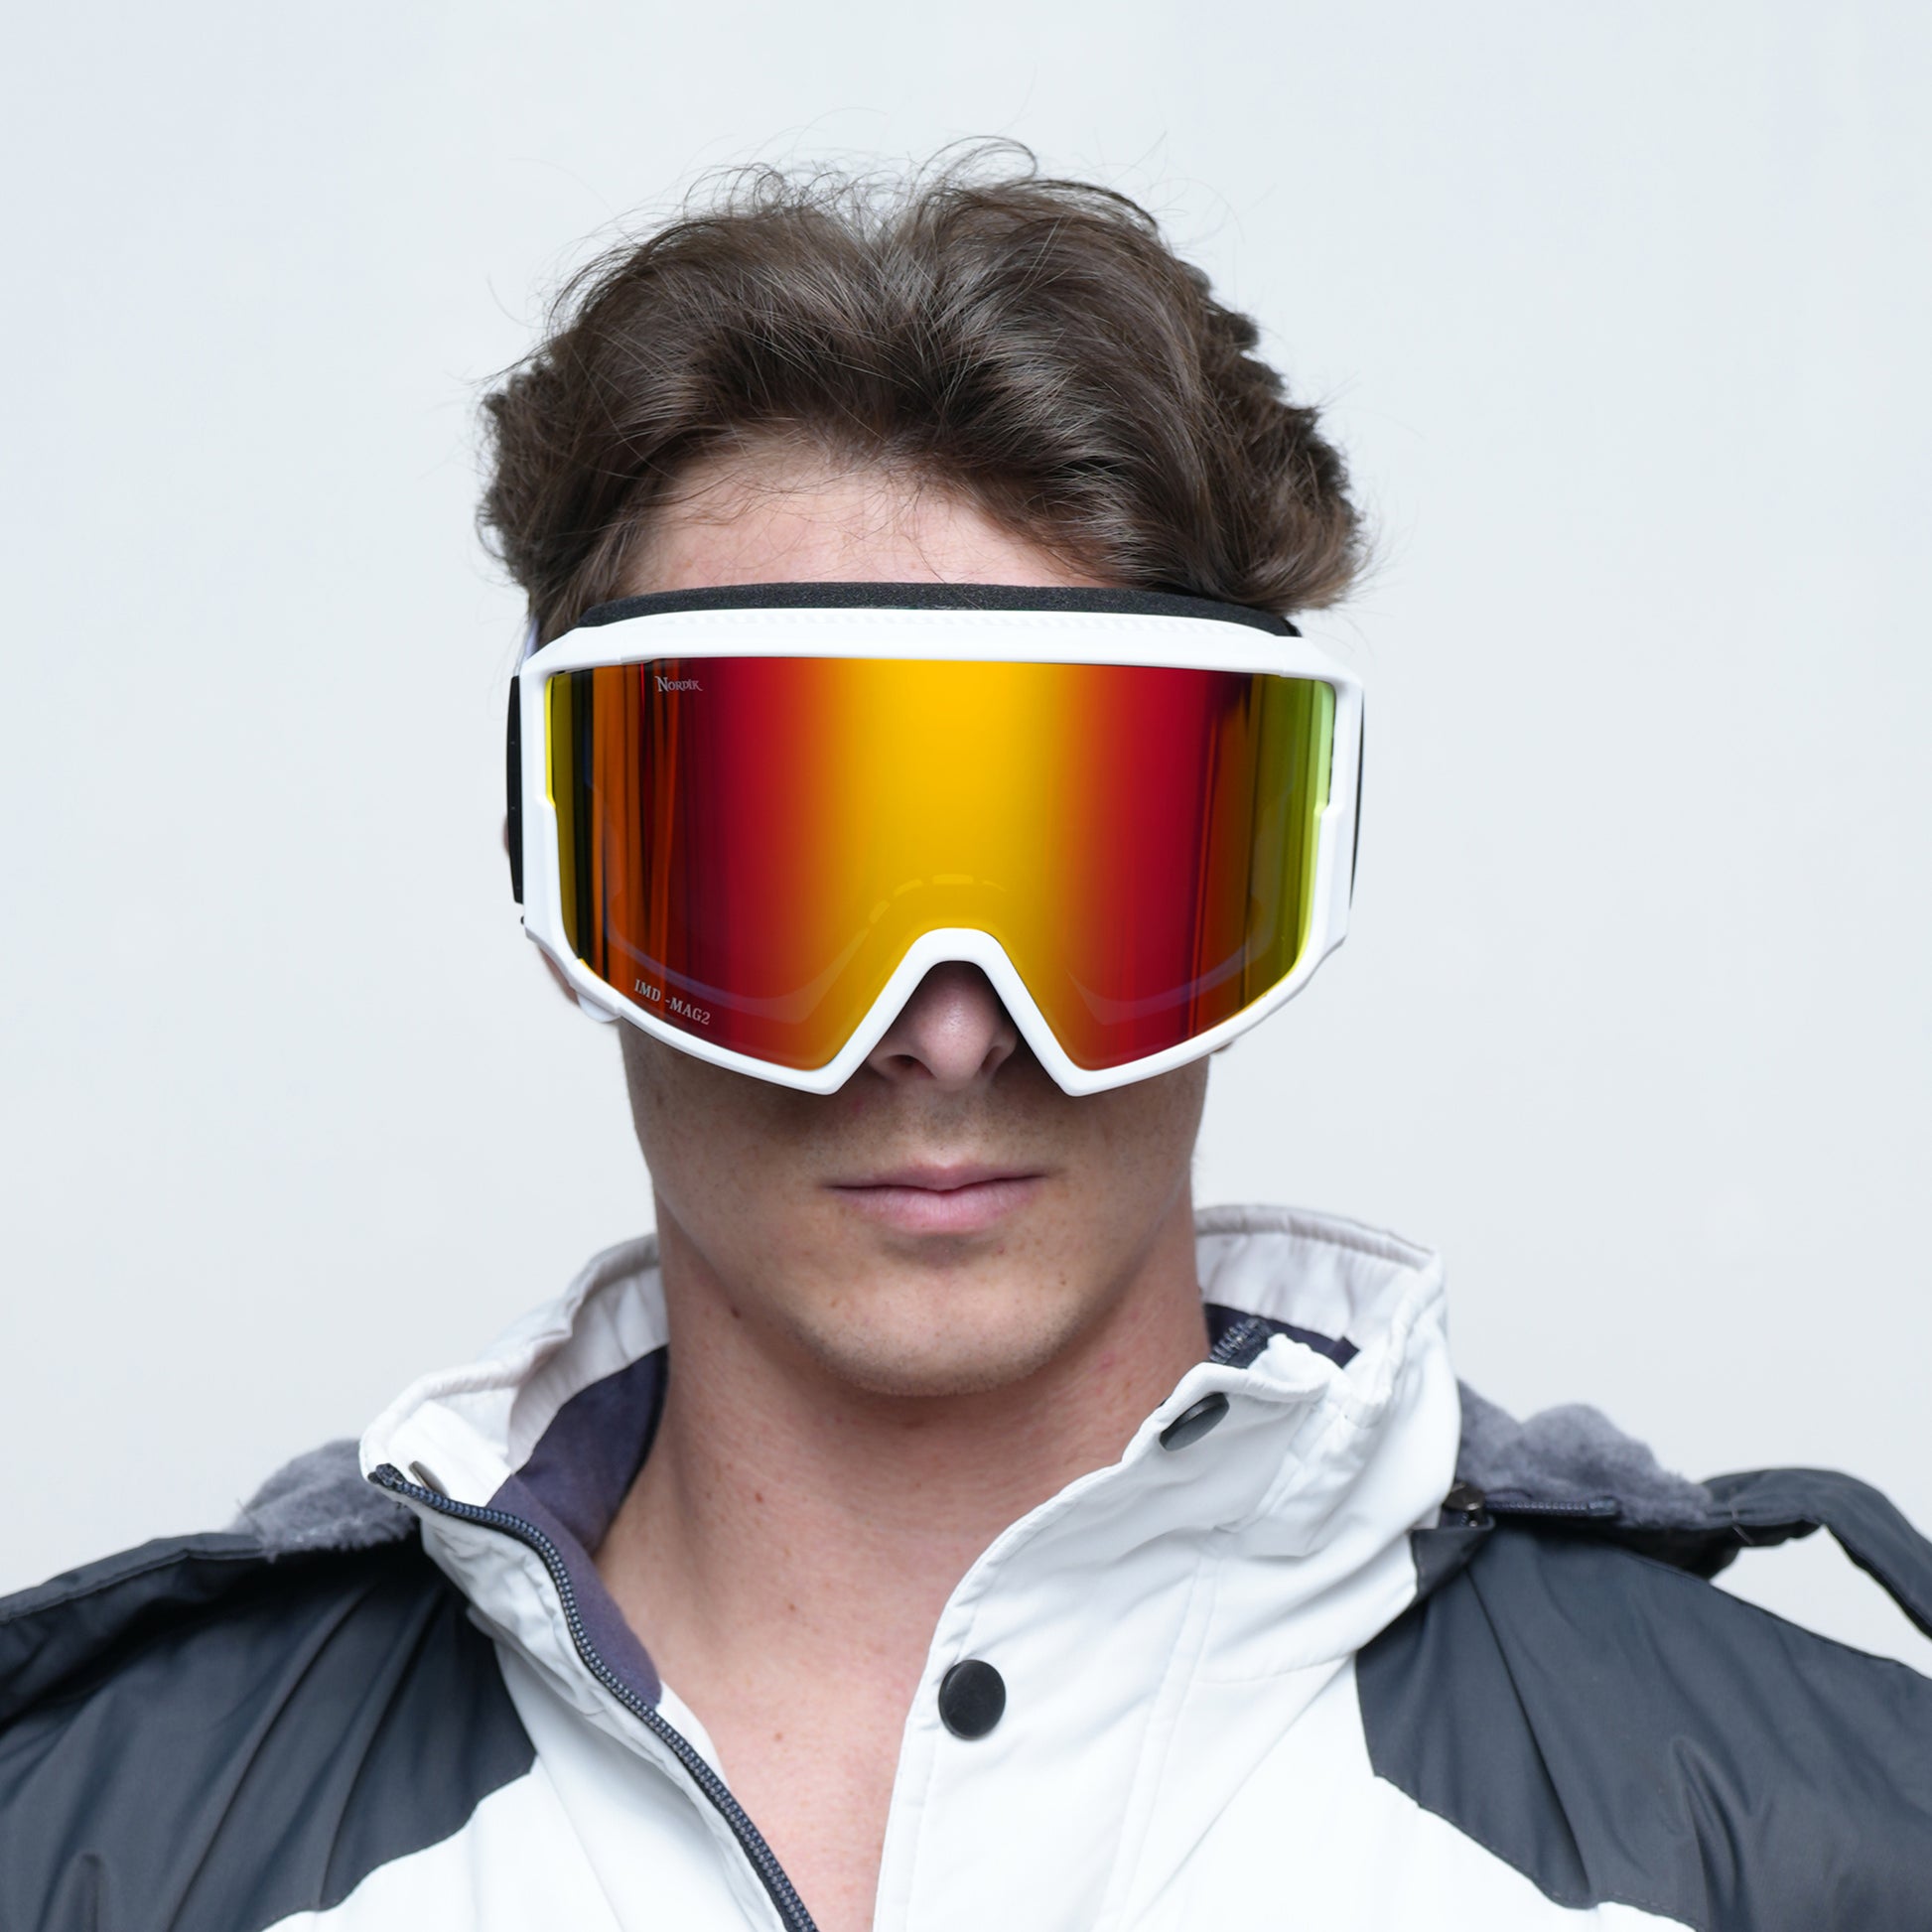 ODIN Ski Goggles